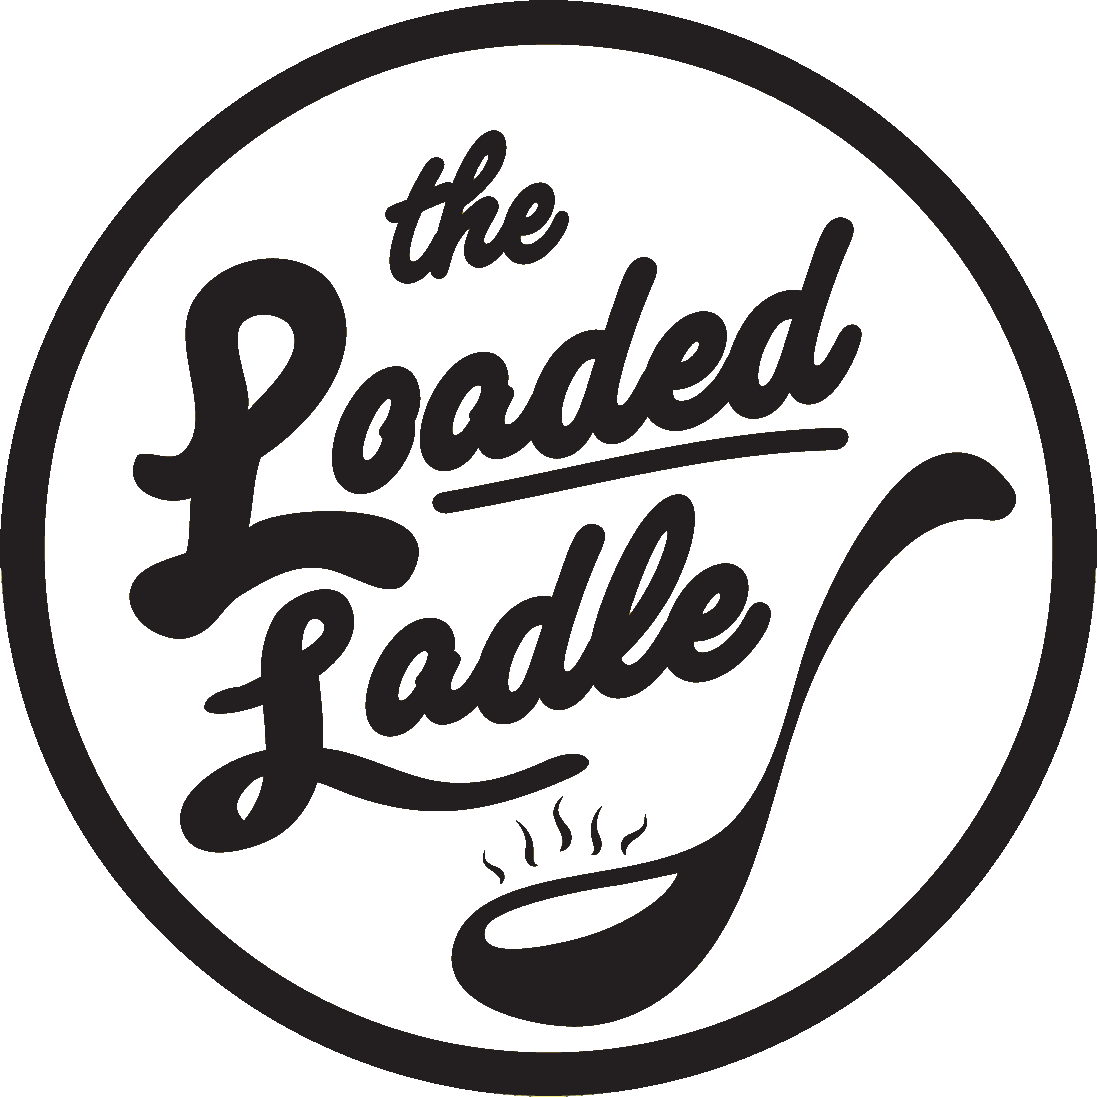 Loaded Ladle